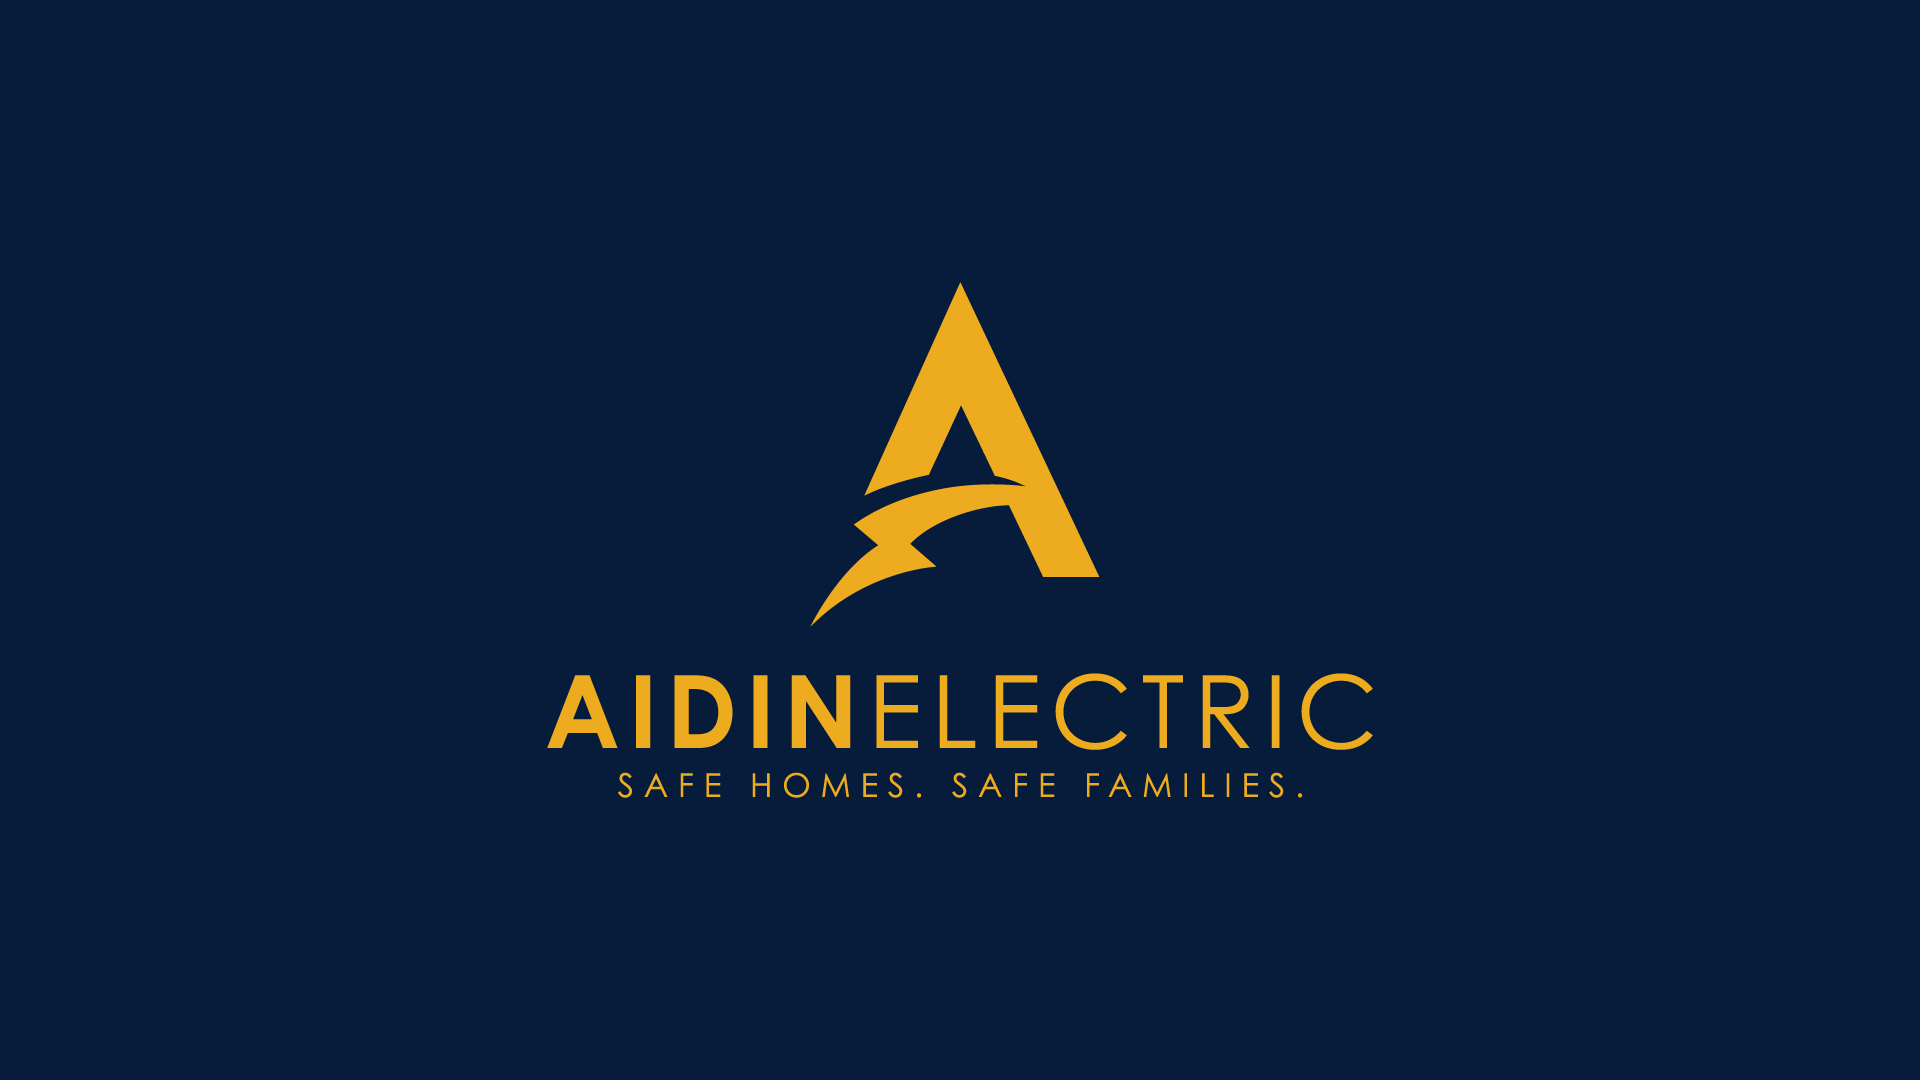 Aidin Electric ipad website display Agency 877